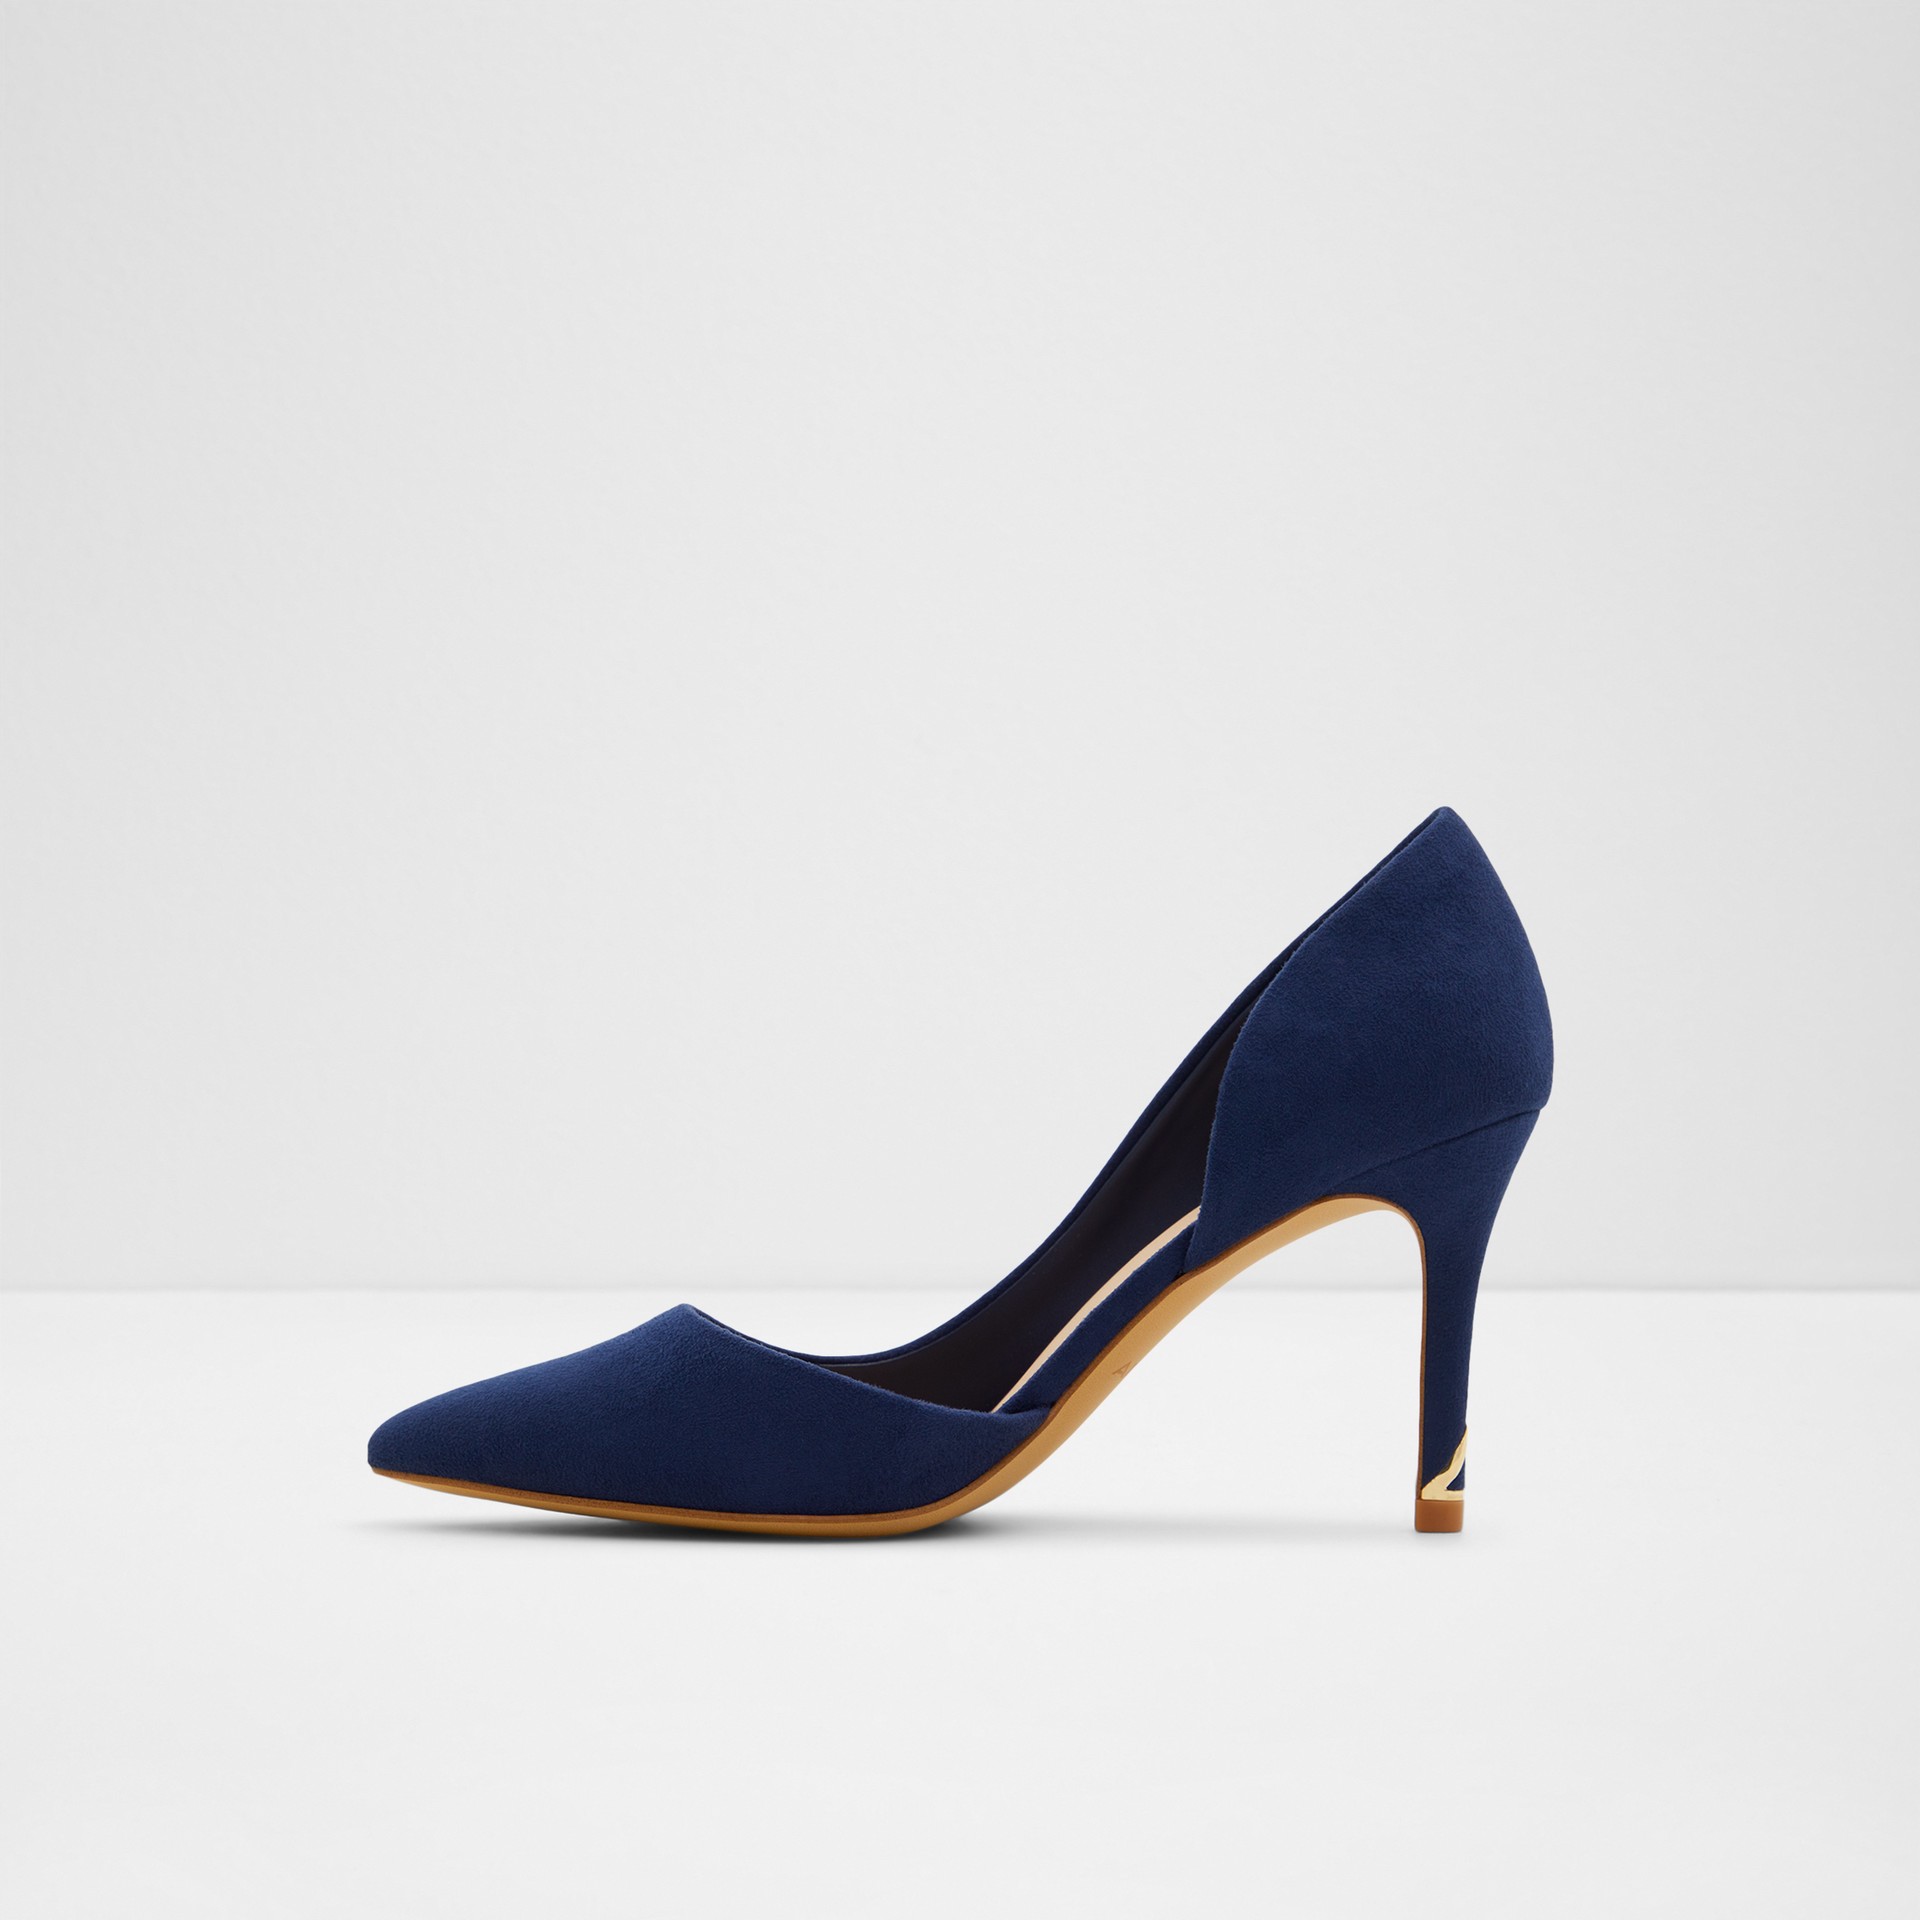 Diplomático Gladys imperdonable Zapatos de salón para mujer en azul marino VRALG 412003027